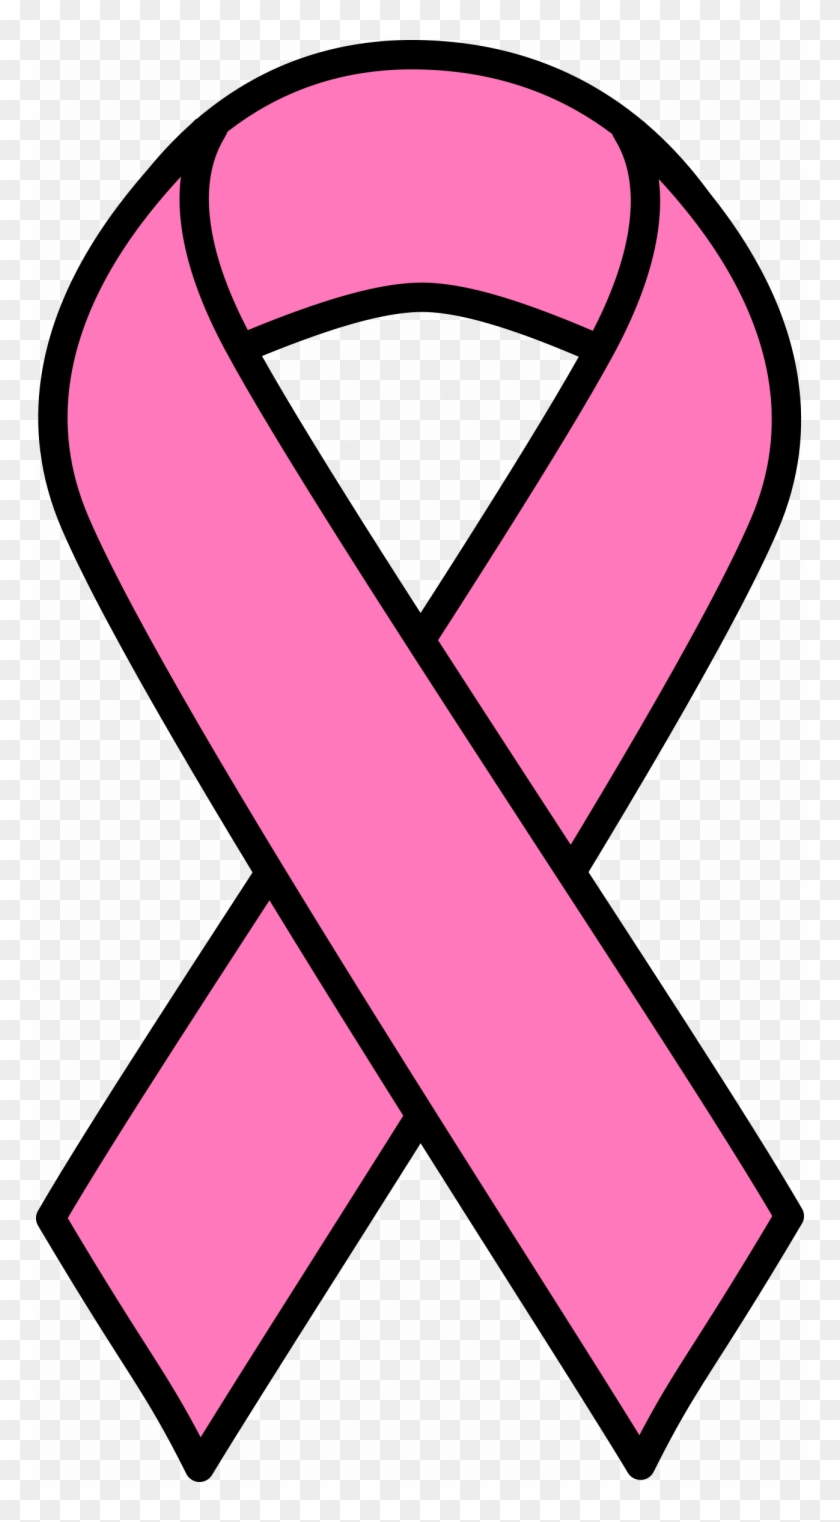 Download Creative Inspiration Breast Cancer Symbols - Download Creative Inspiration Breast Cancer Symbols #200909